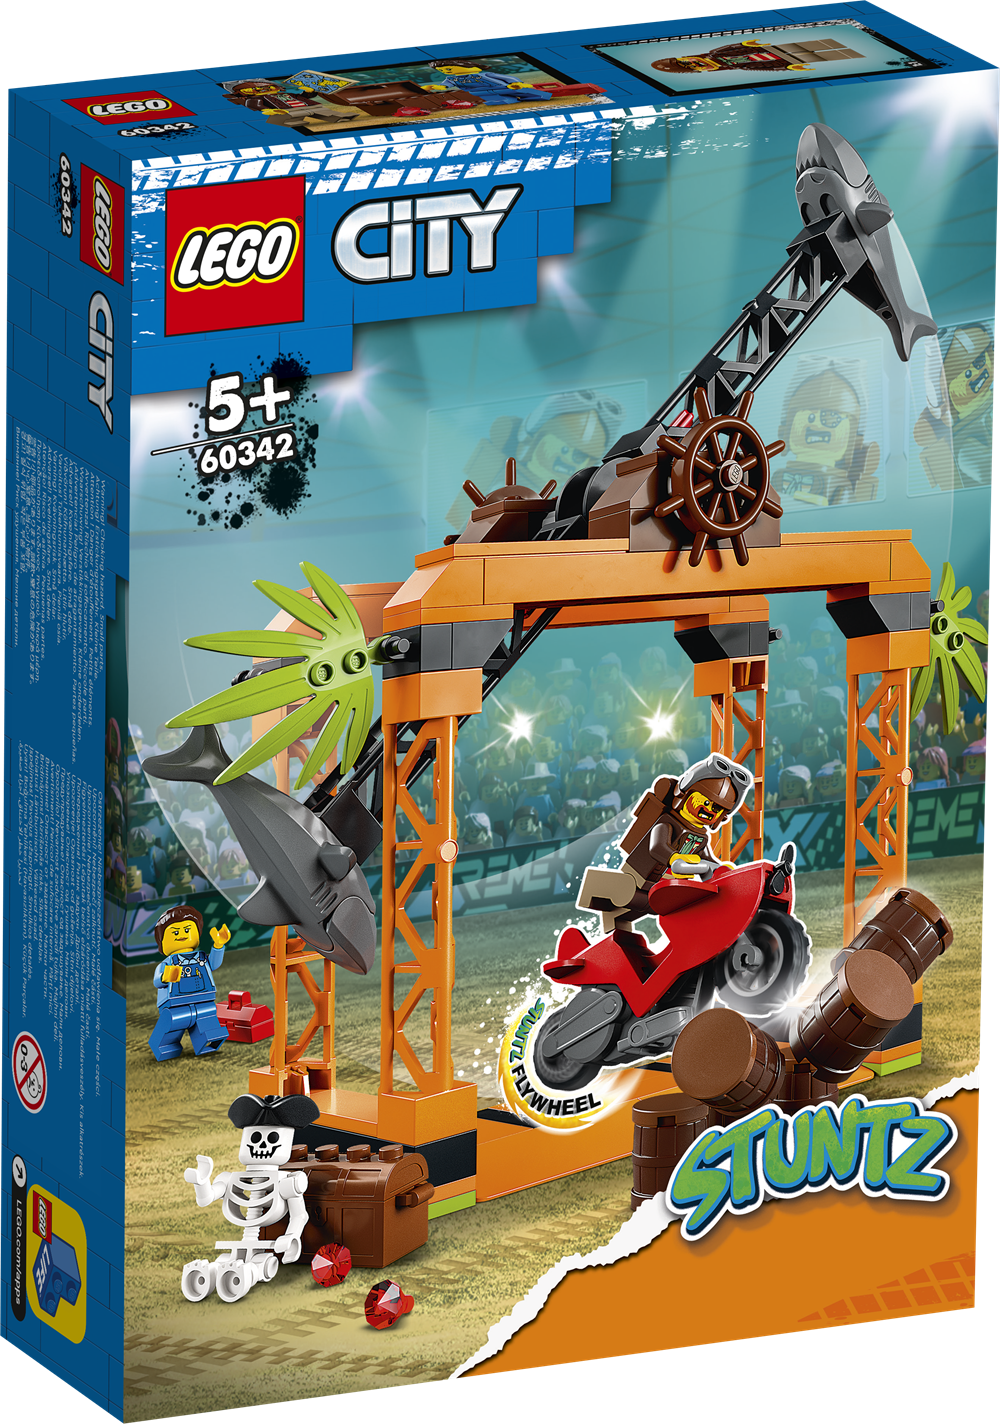 LEGO City 60342 Stuntudfordring med hajangreb